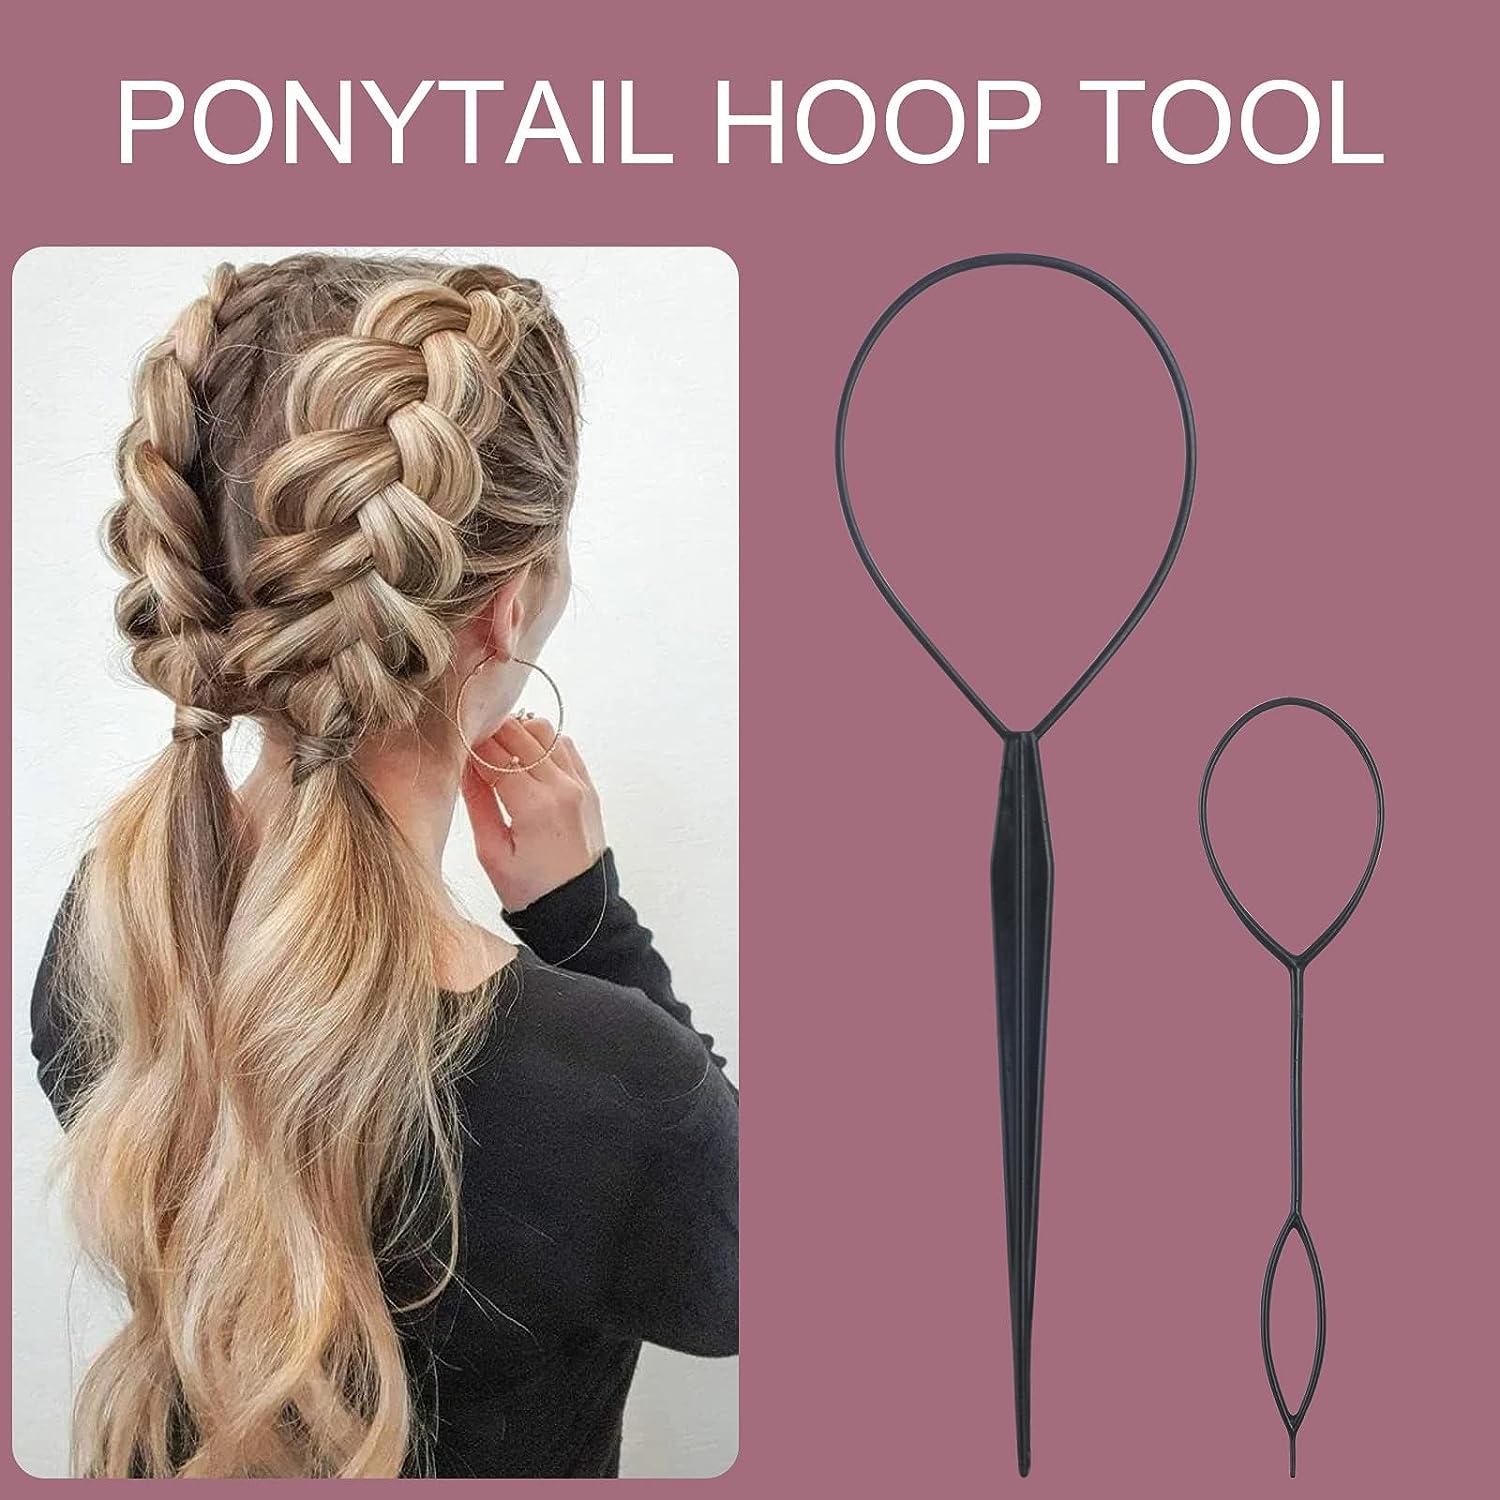  Topsy Tail Hair Tool,Hair Loop Styling French Braid